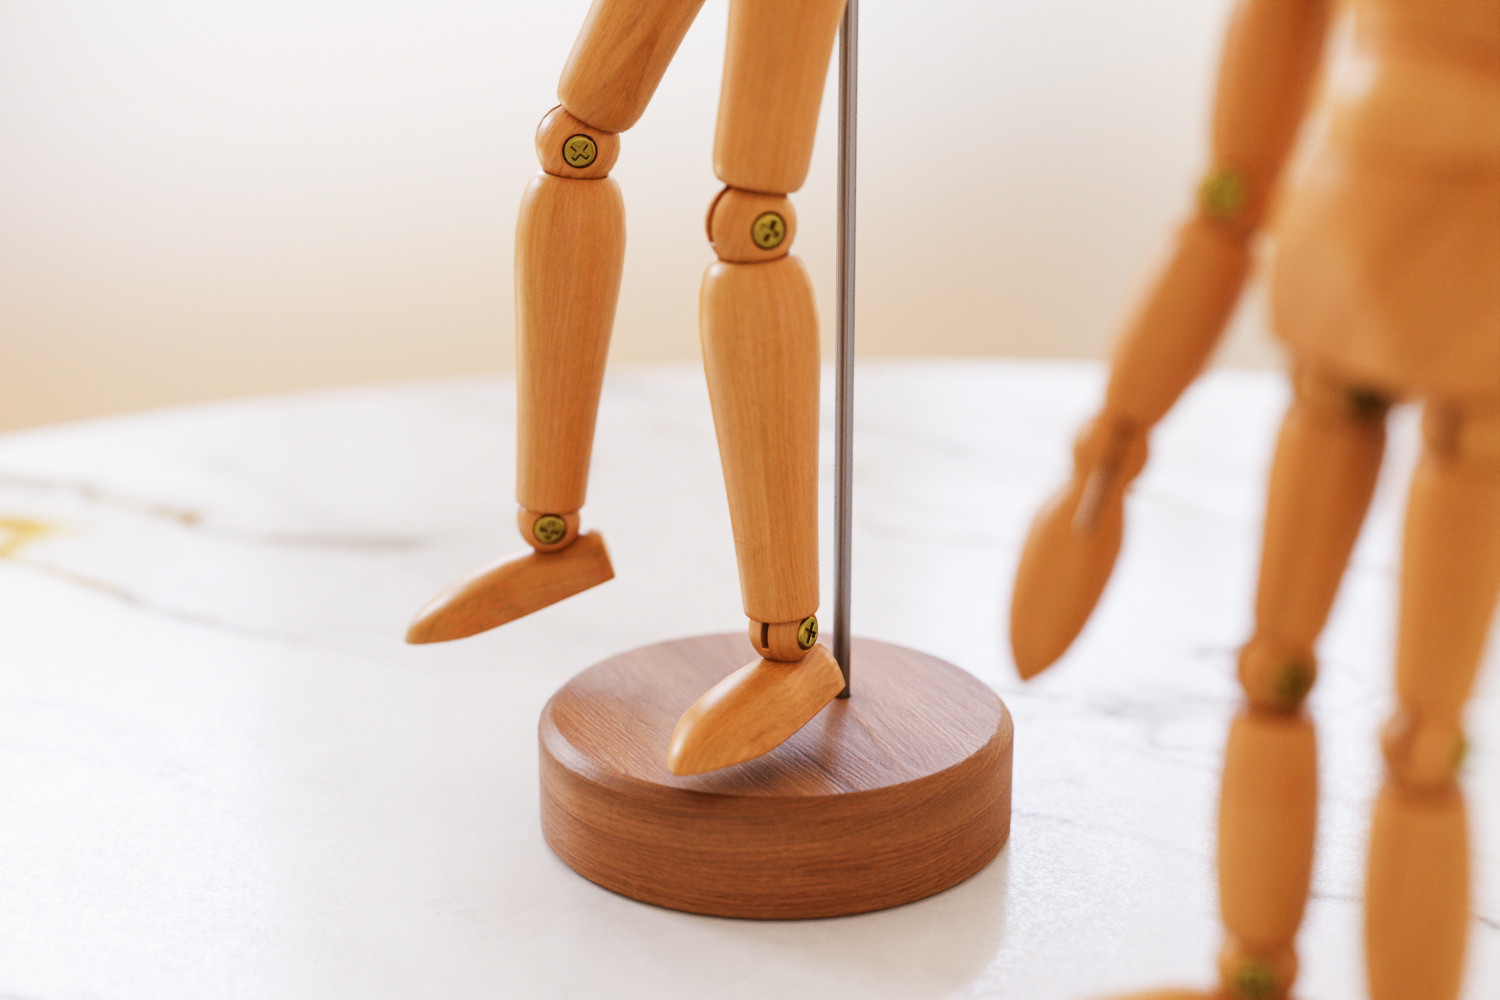 Wooden pose figures 3D model